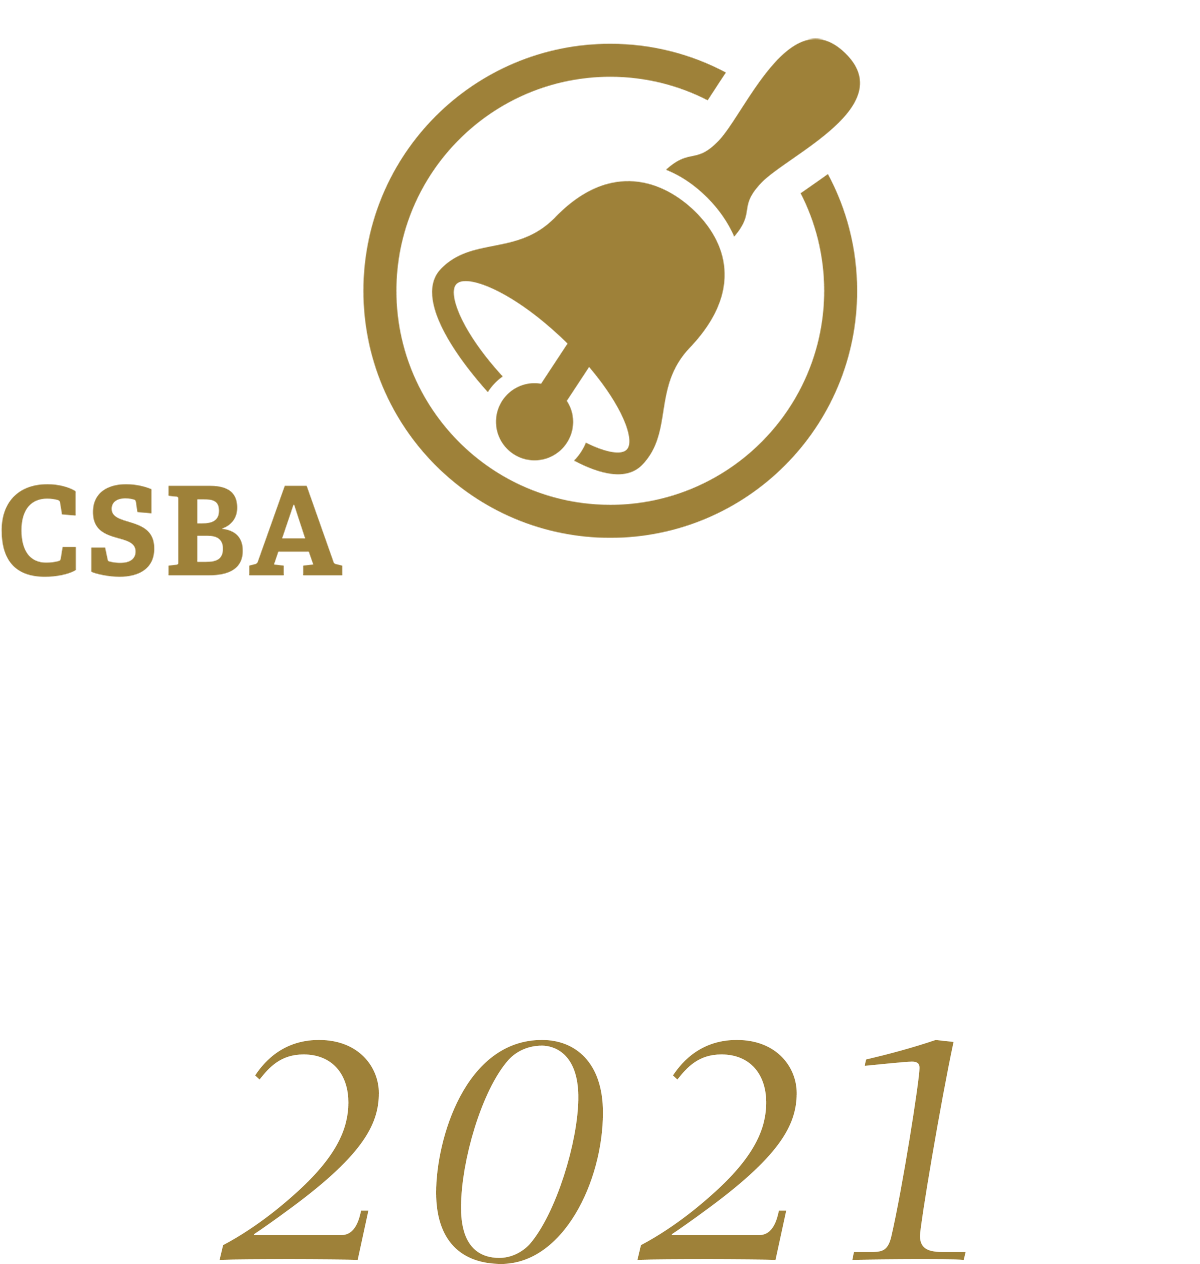 CSBA Golden Bell Awards 2021 logo